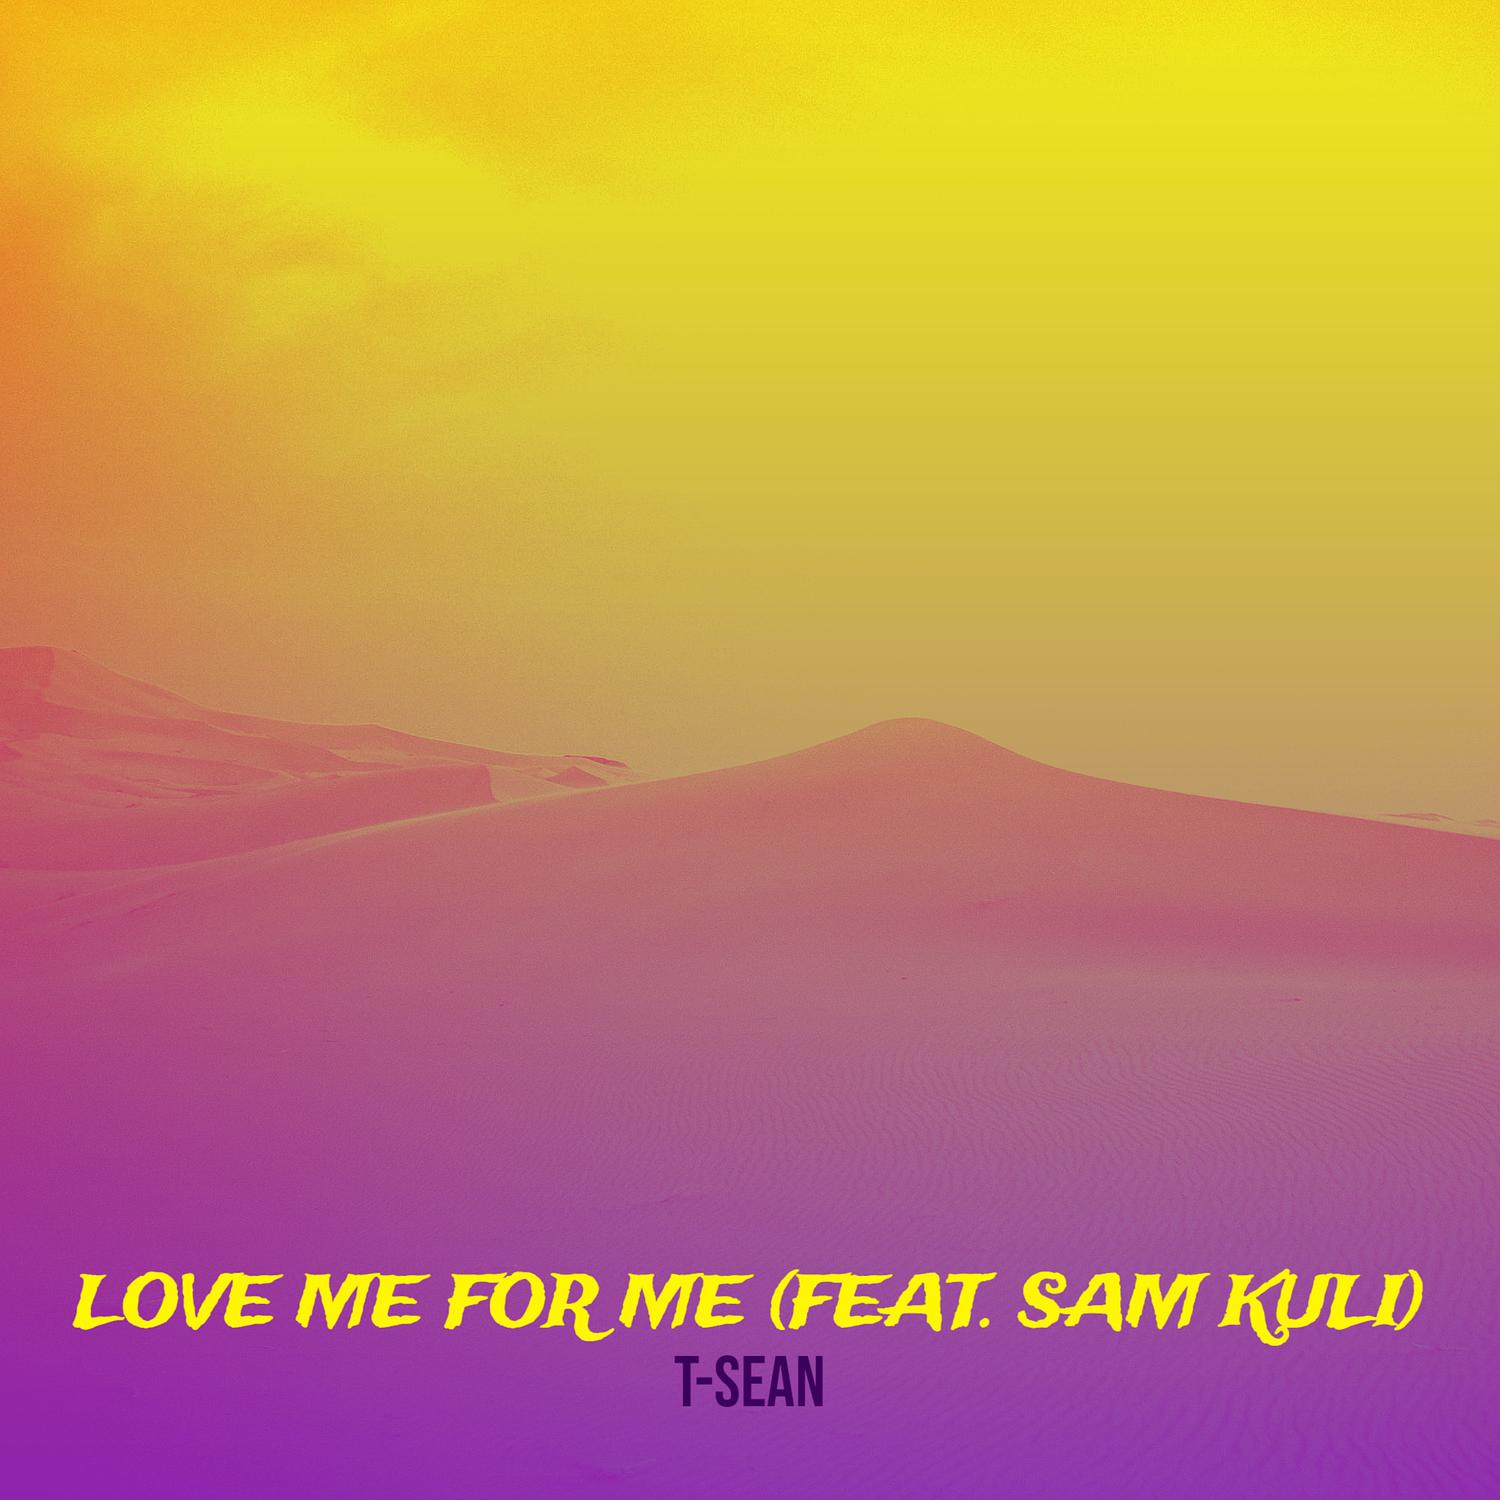 T-Sean - Love Me for Me